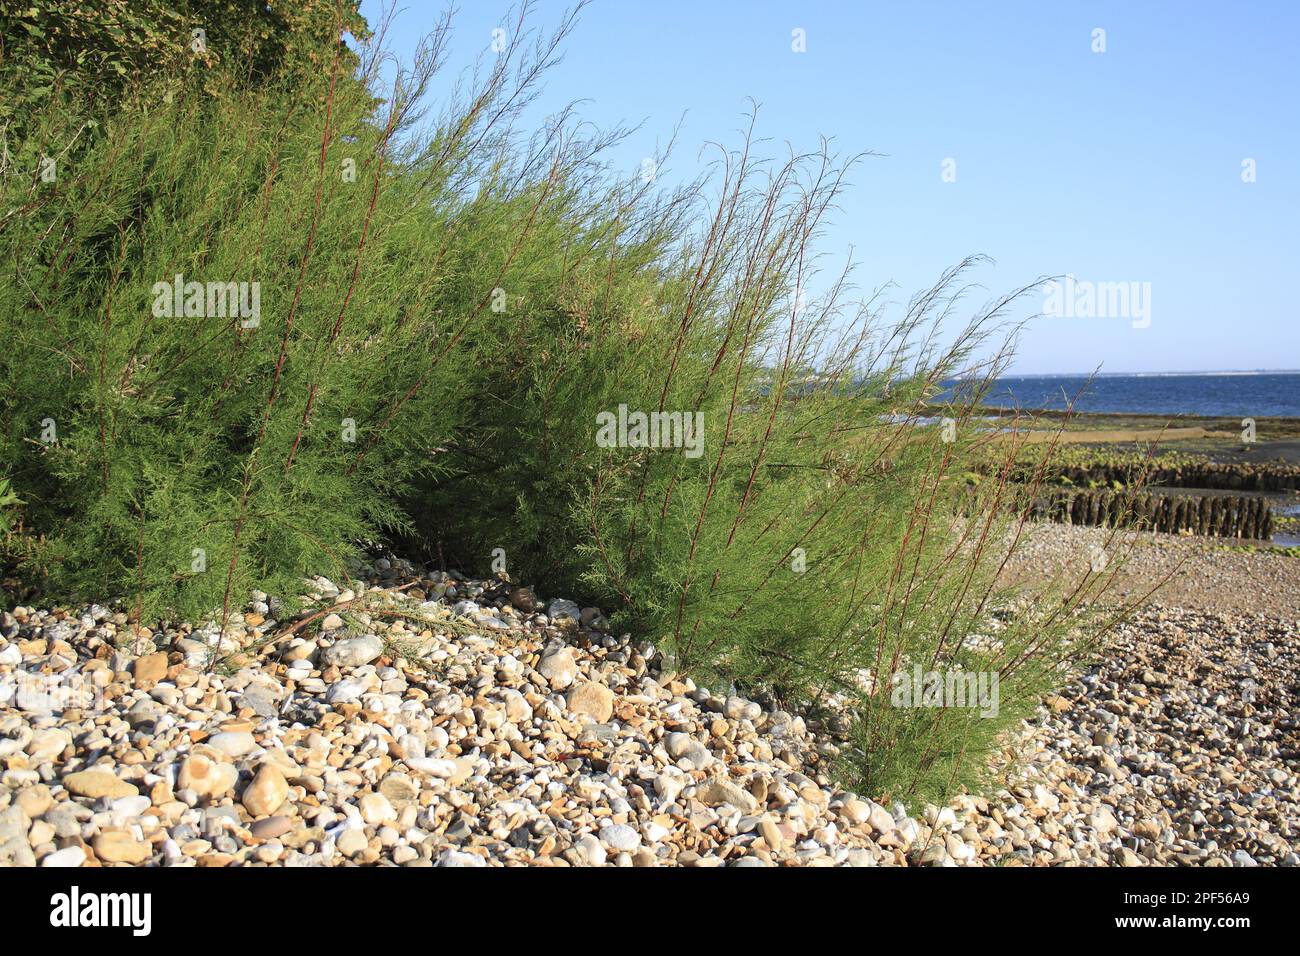 Tamarisk (Tamarix gallica) introduced species, habit, growing at edge of beach, Bembridge, Isle of Wight, England, United Kingdom Stock Photo